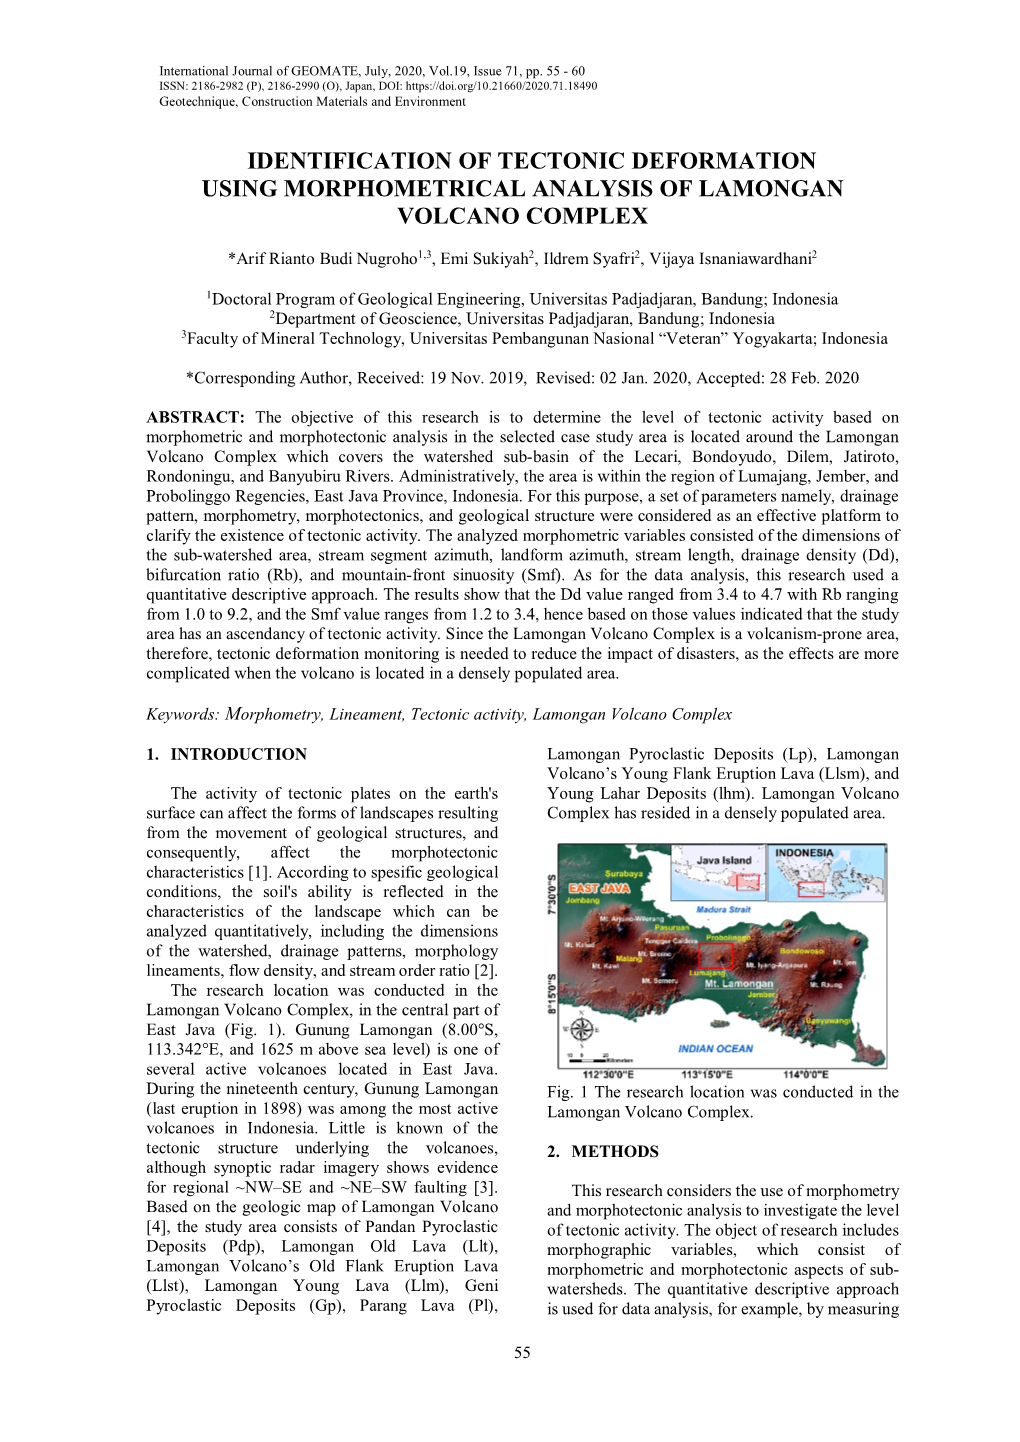 Identification of Tectonic Deformation Using Morphometrical Analysis of Lamongan Volcano Complex